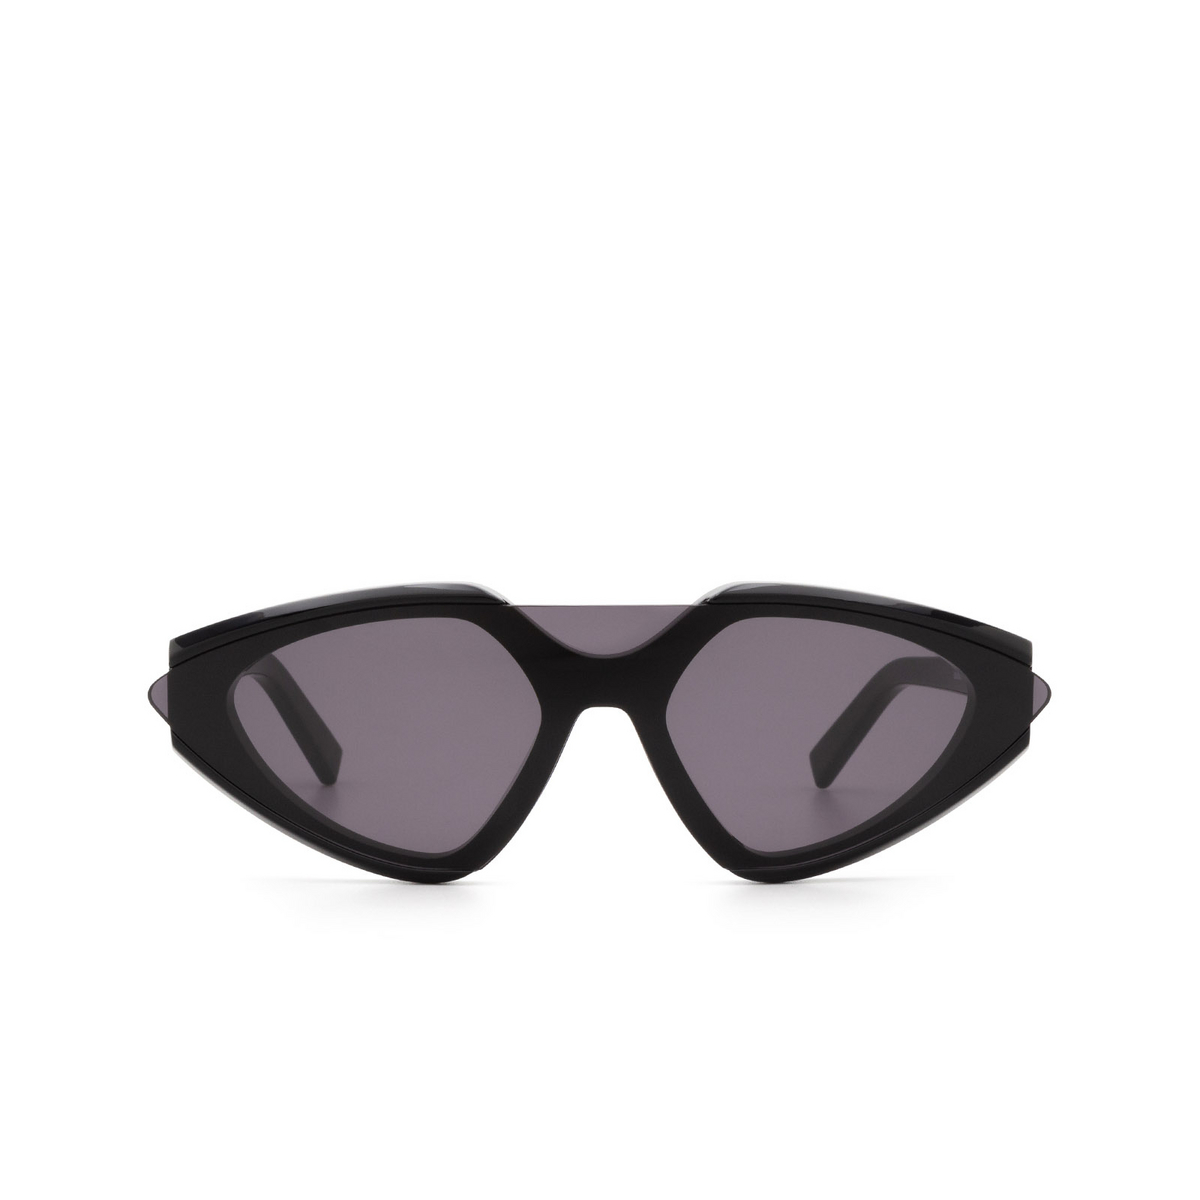 Sportmax® Irregular Sunglasses: SM0001 color Black 01A - front view.